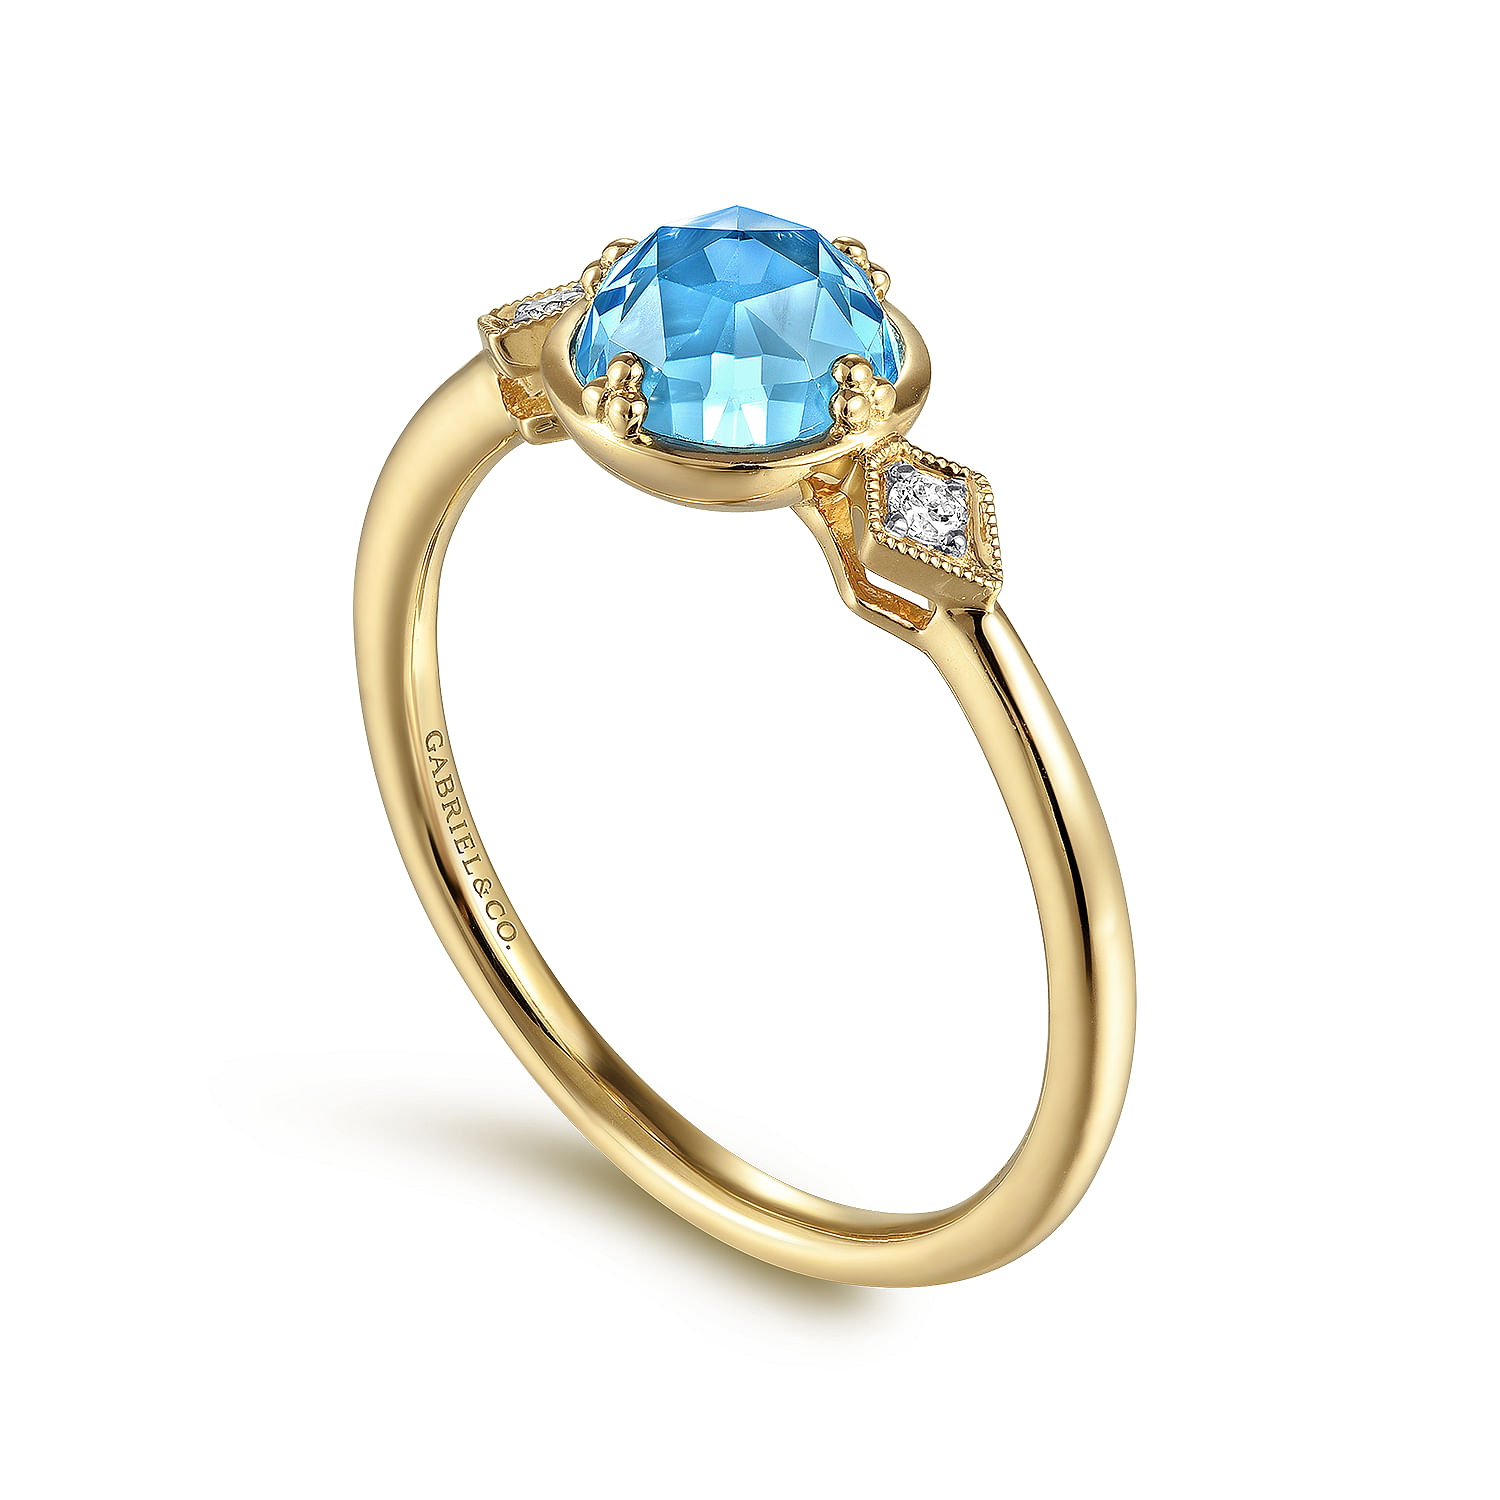 14K Yellow Gold Three Stone Blue Topaz and Diamond Ring